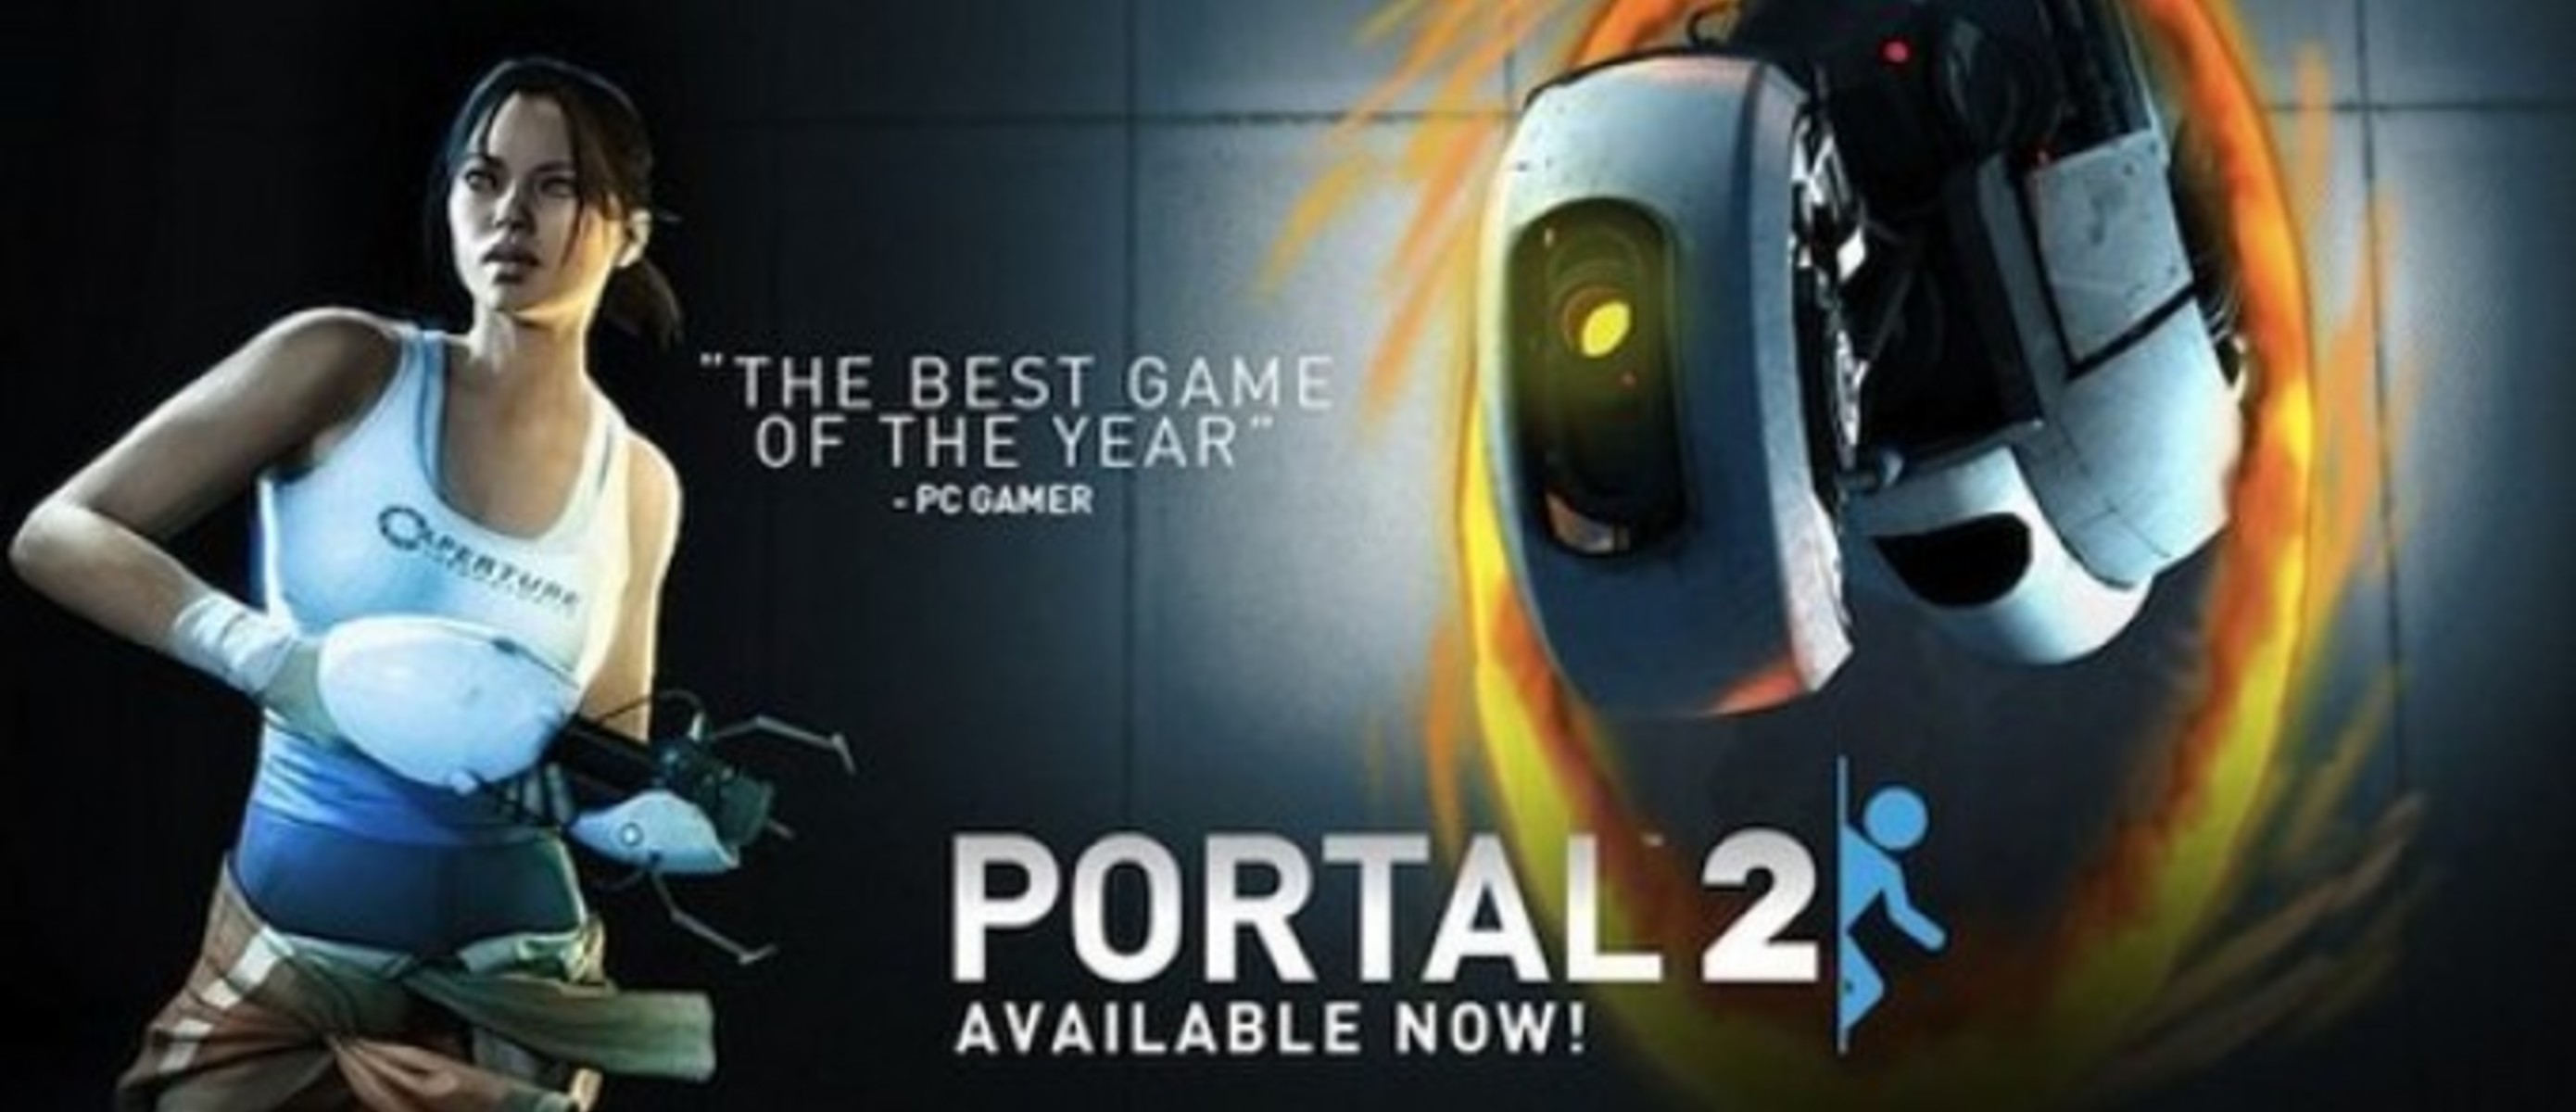 Portal 2 для двоих на одном компьютере фото 46